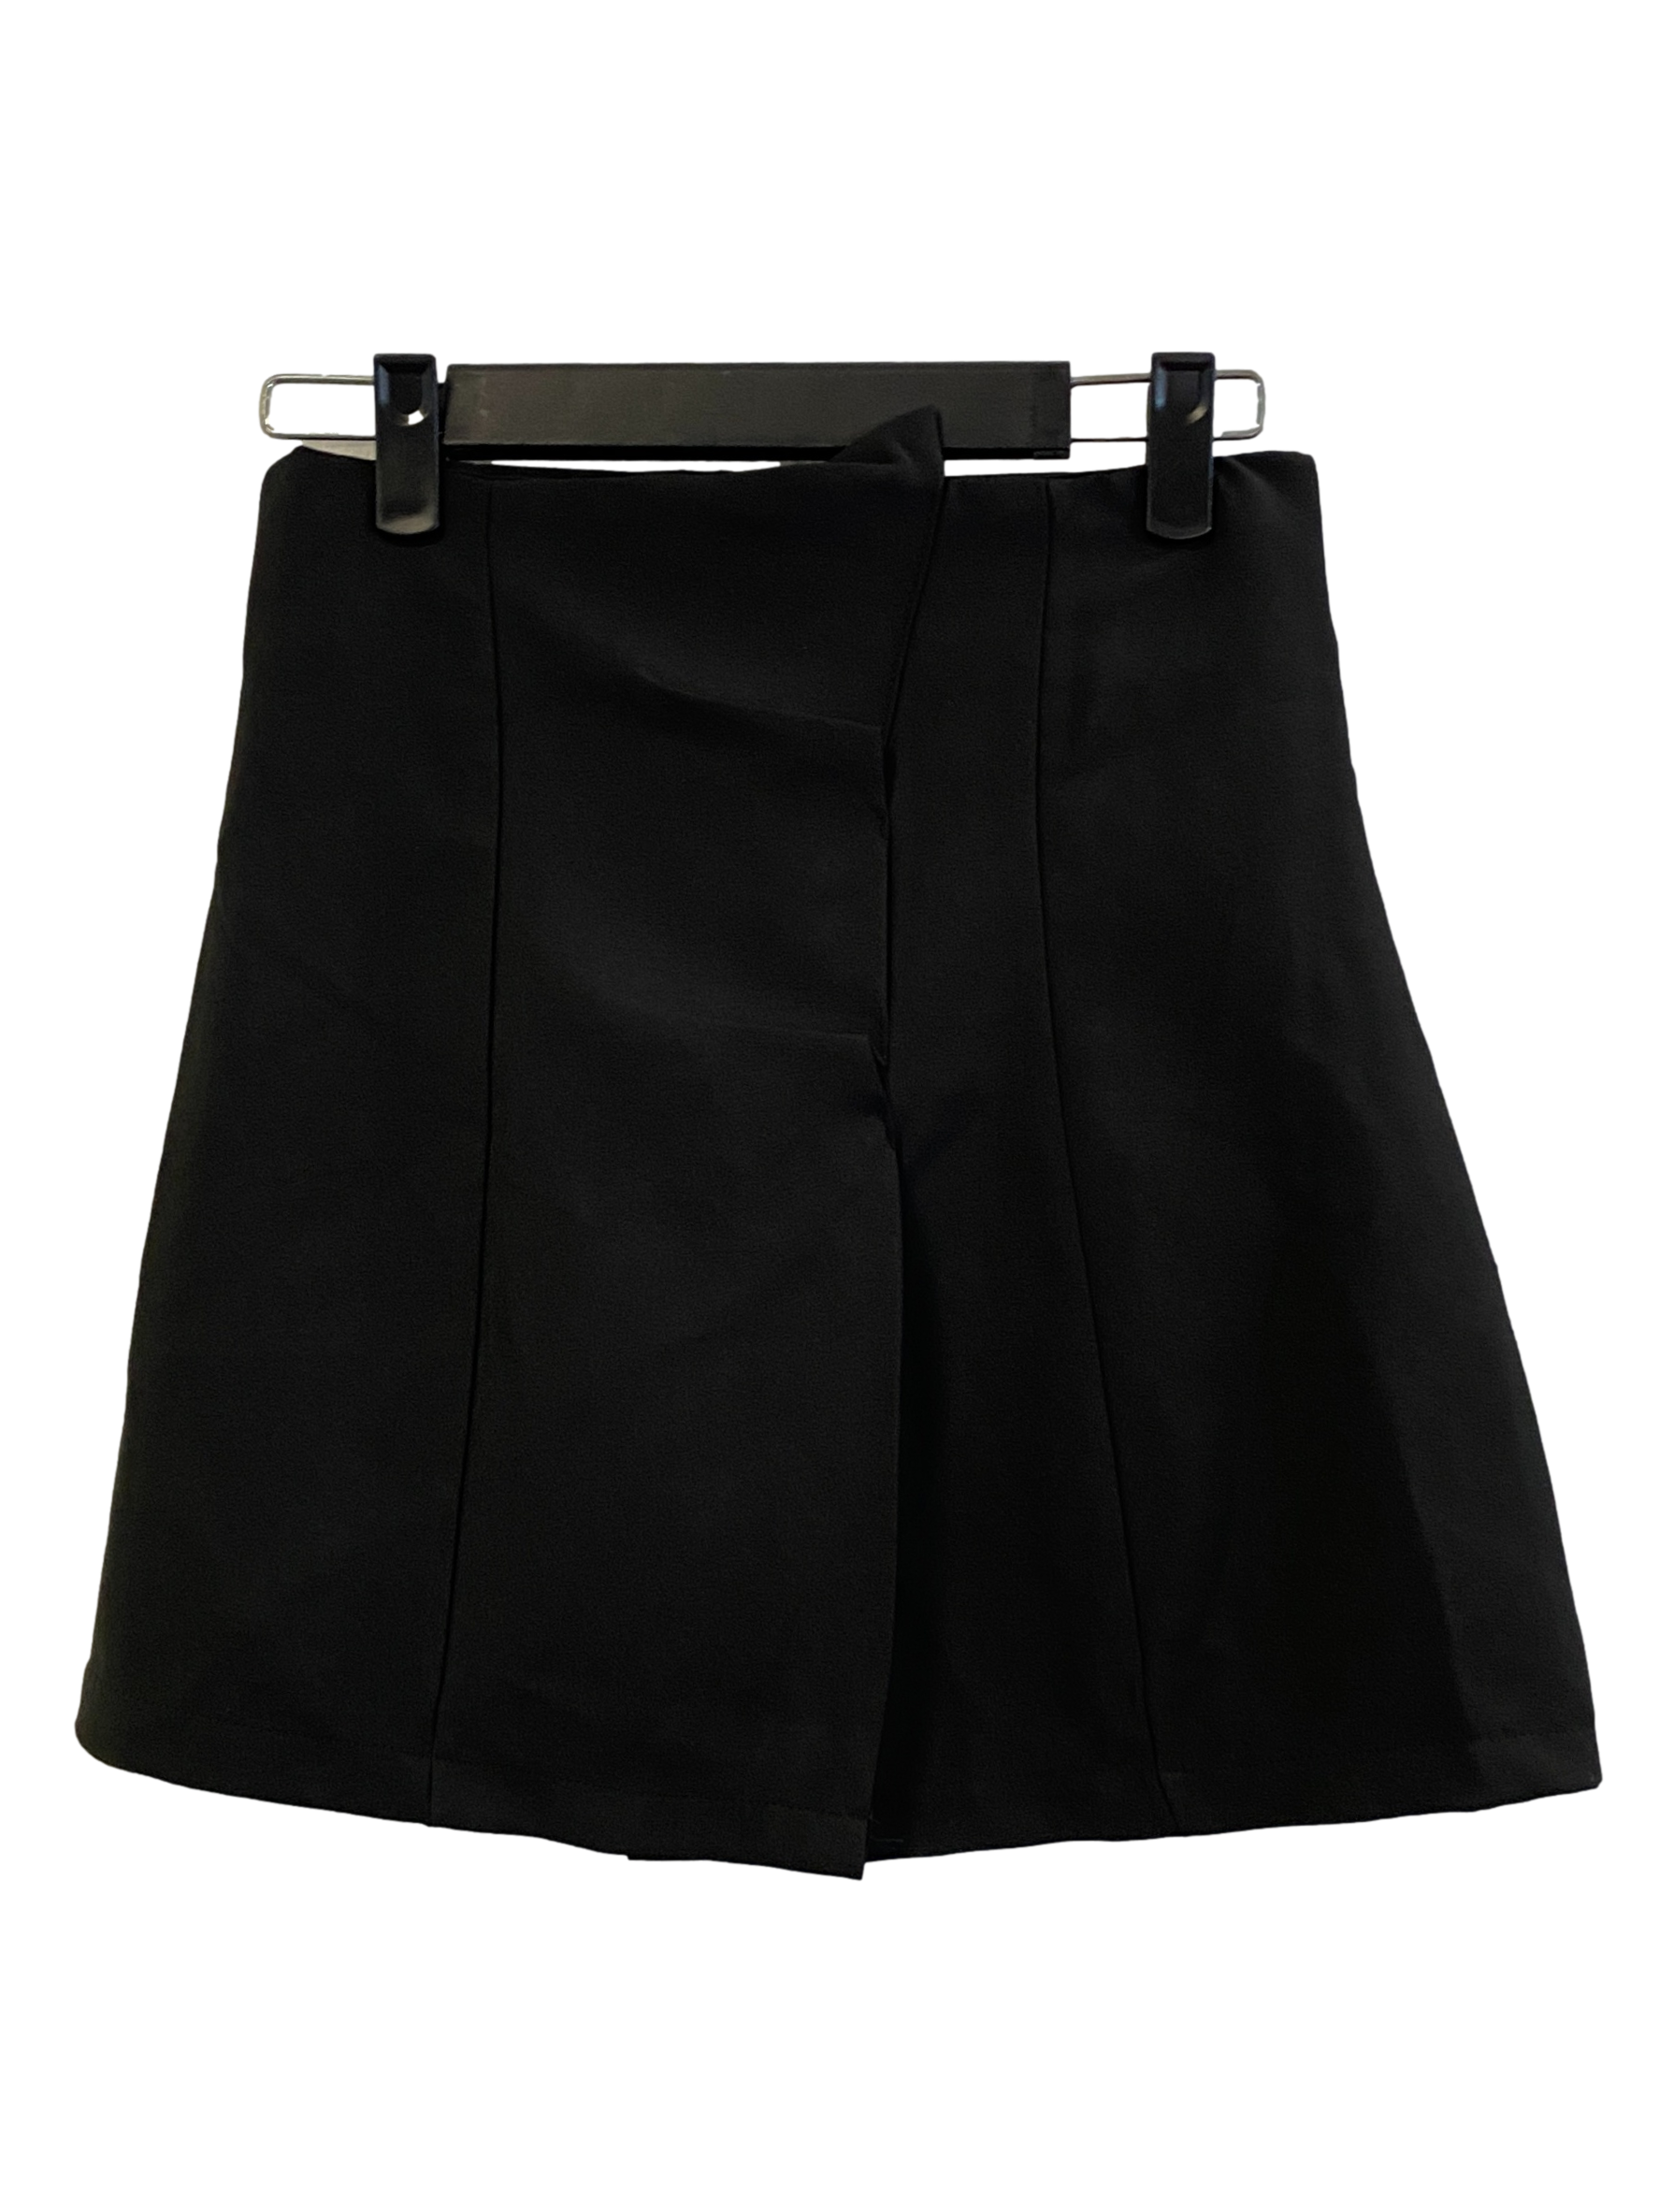 Onyx Black Skirt